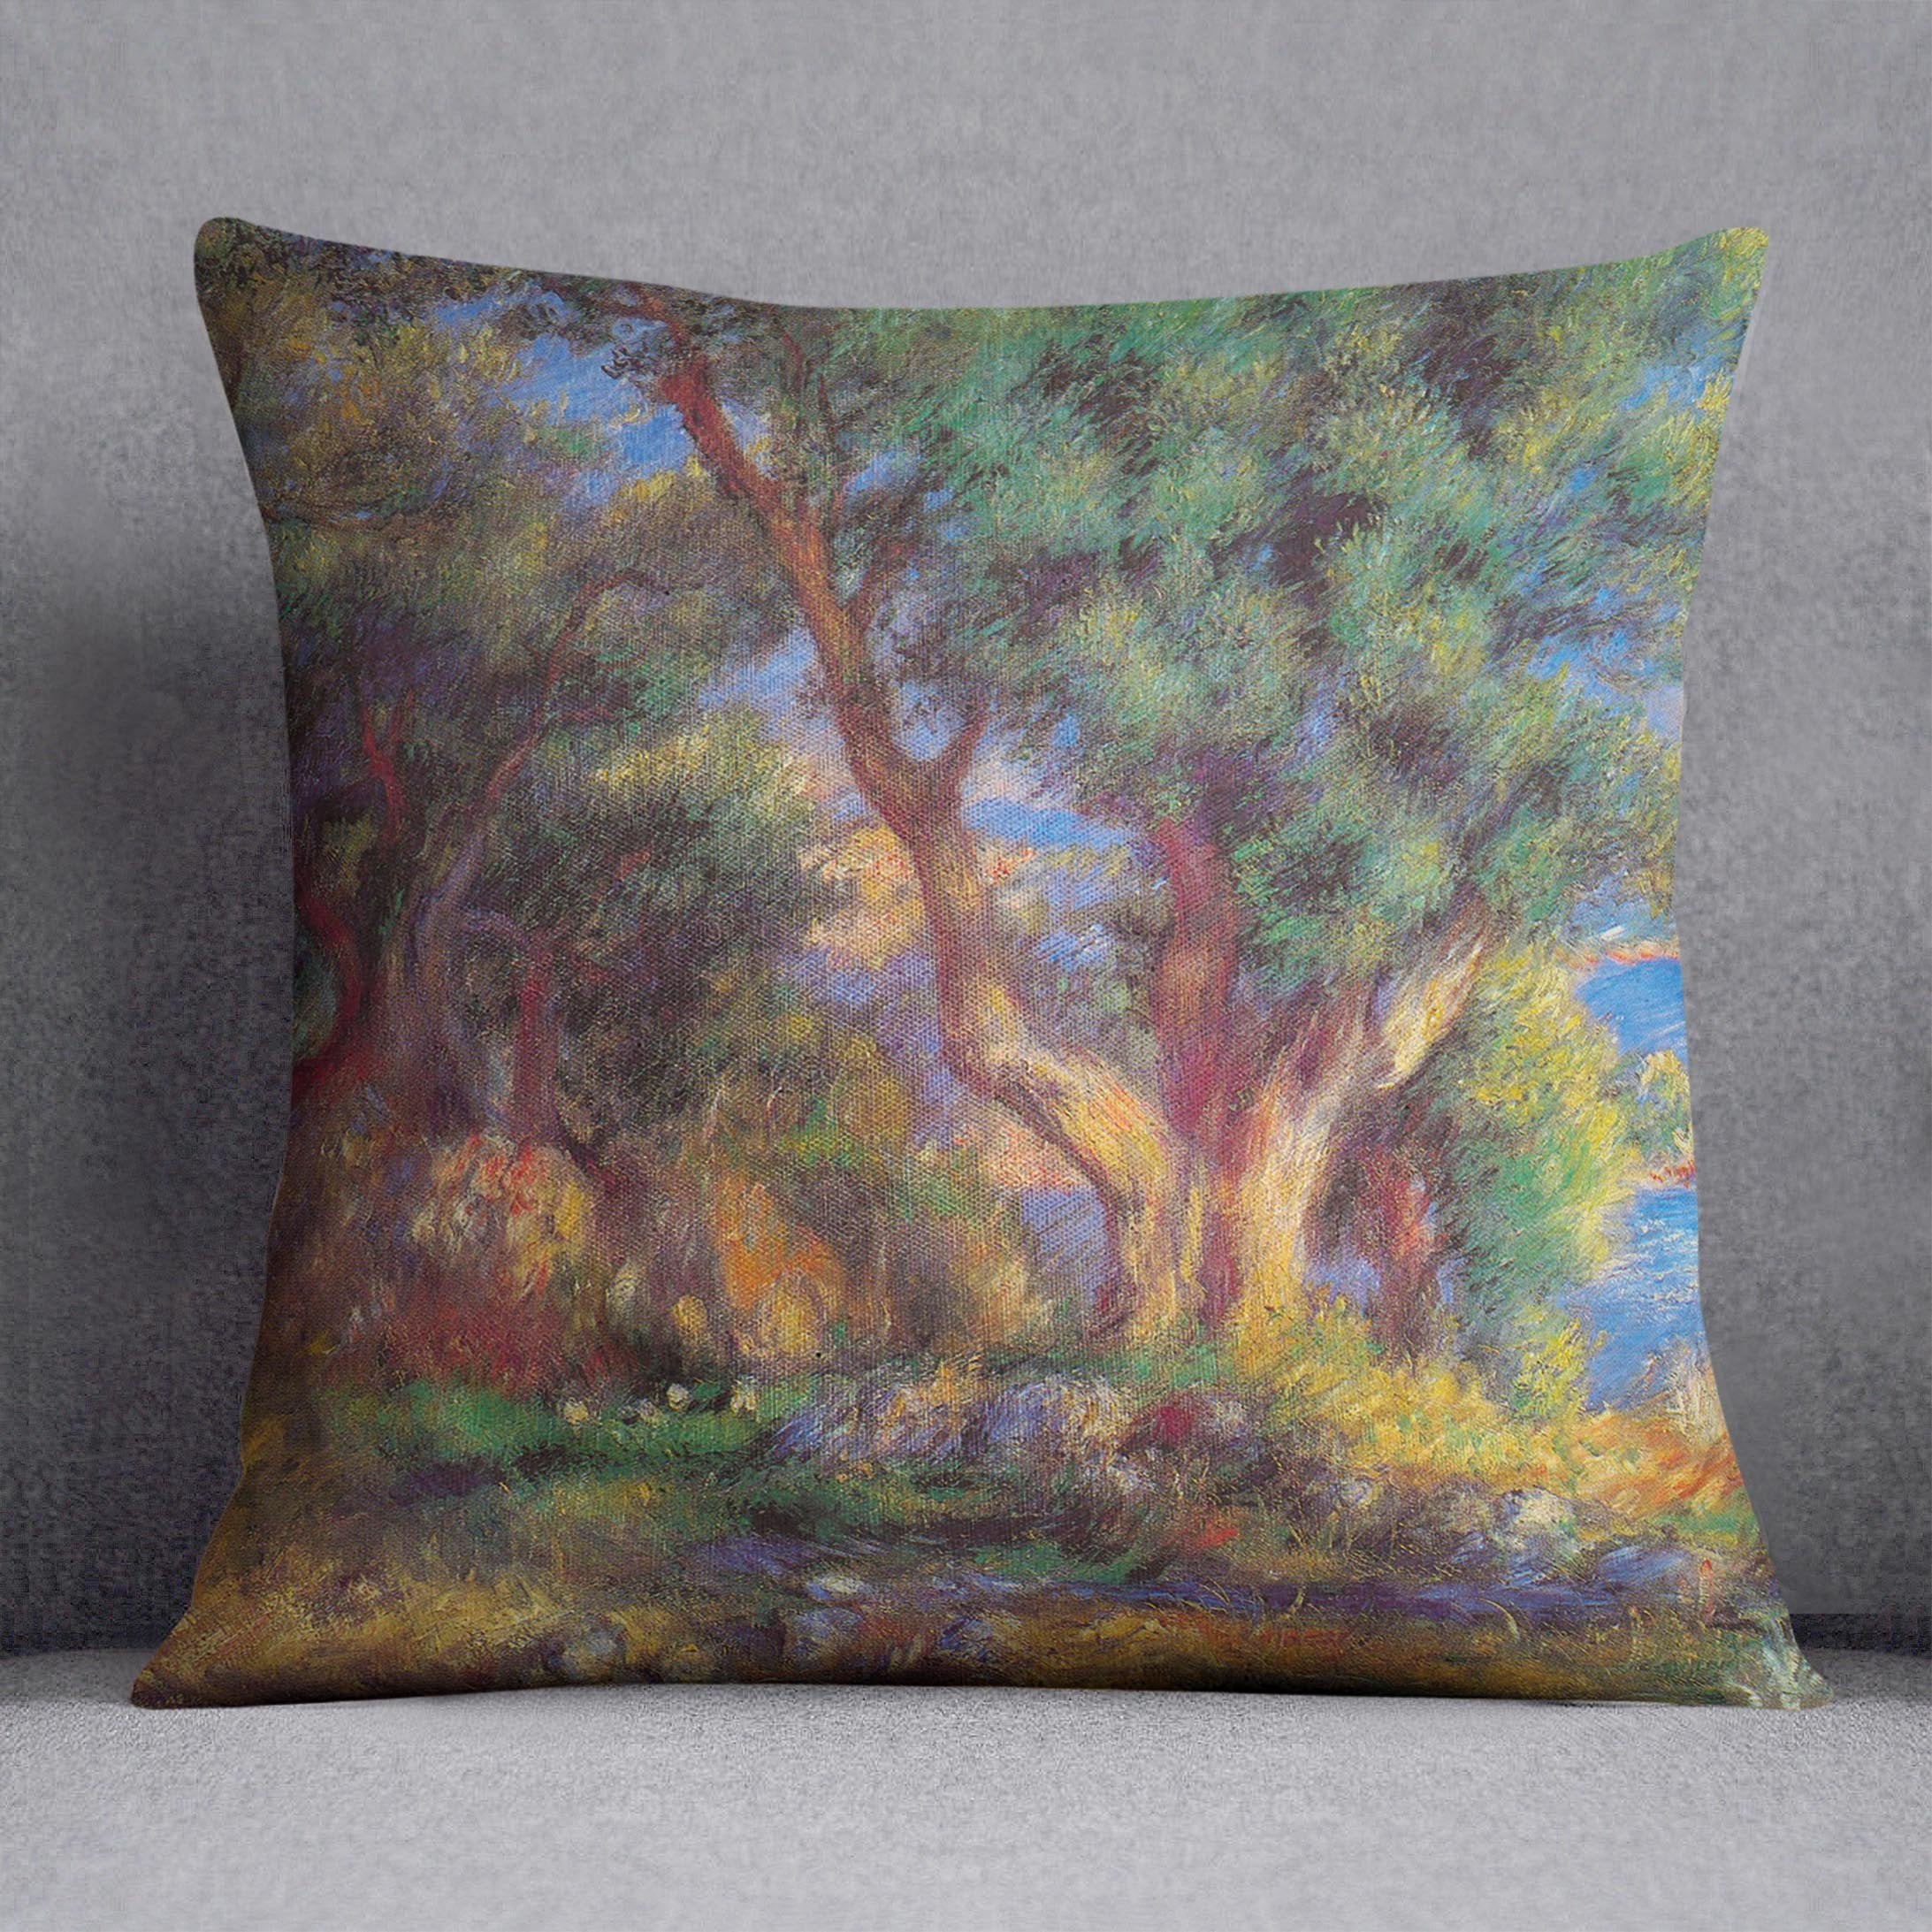 Landscape in Menton by Renoir Throw Pillow